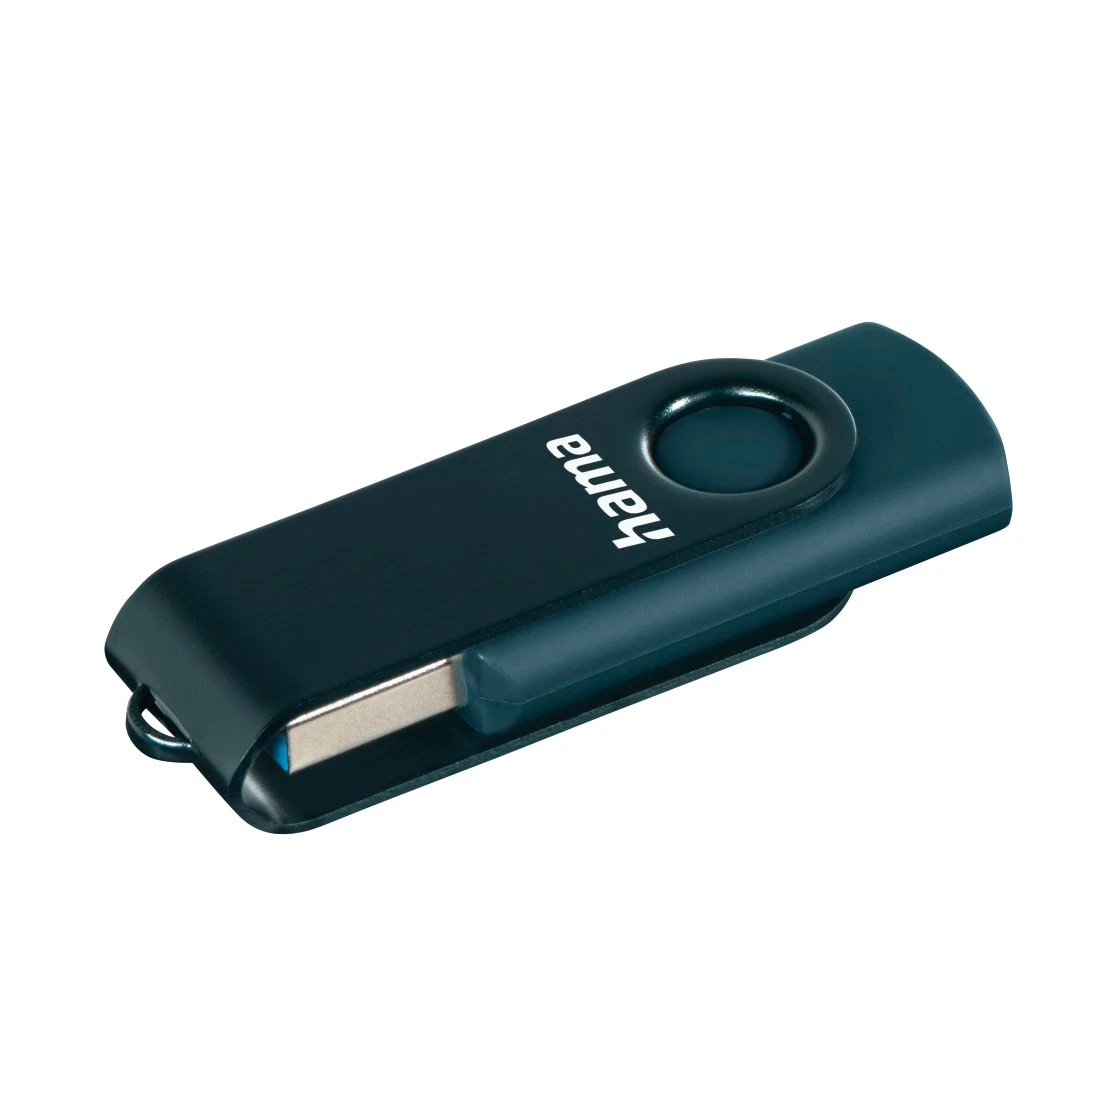 Hama Rotate USB 3.0 64GB USB Memory Stick - Blue | 435873 from Hama - DID Electrical